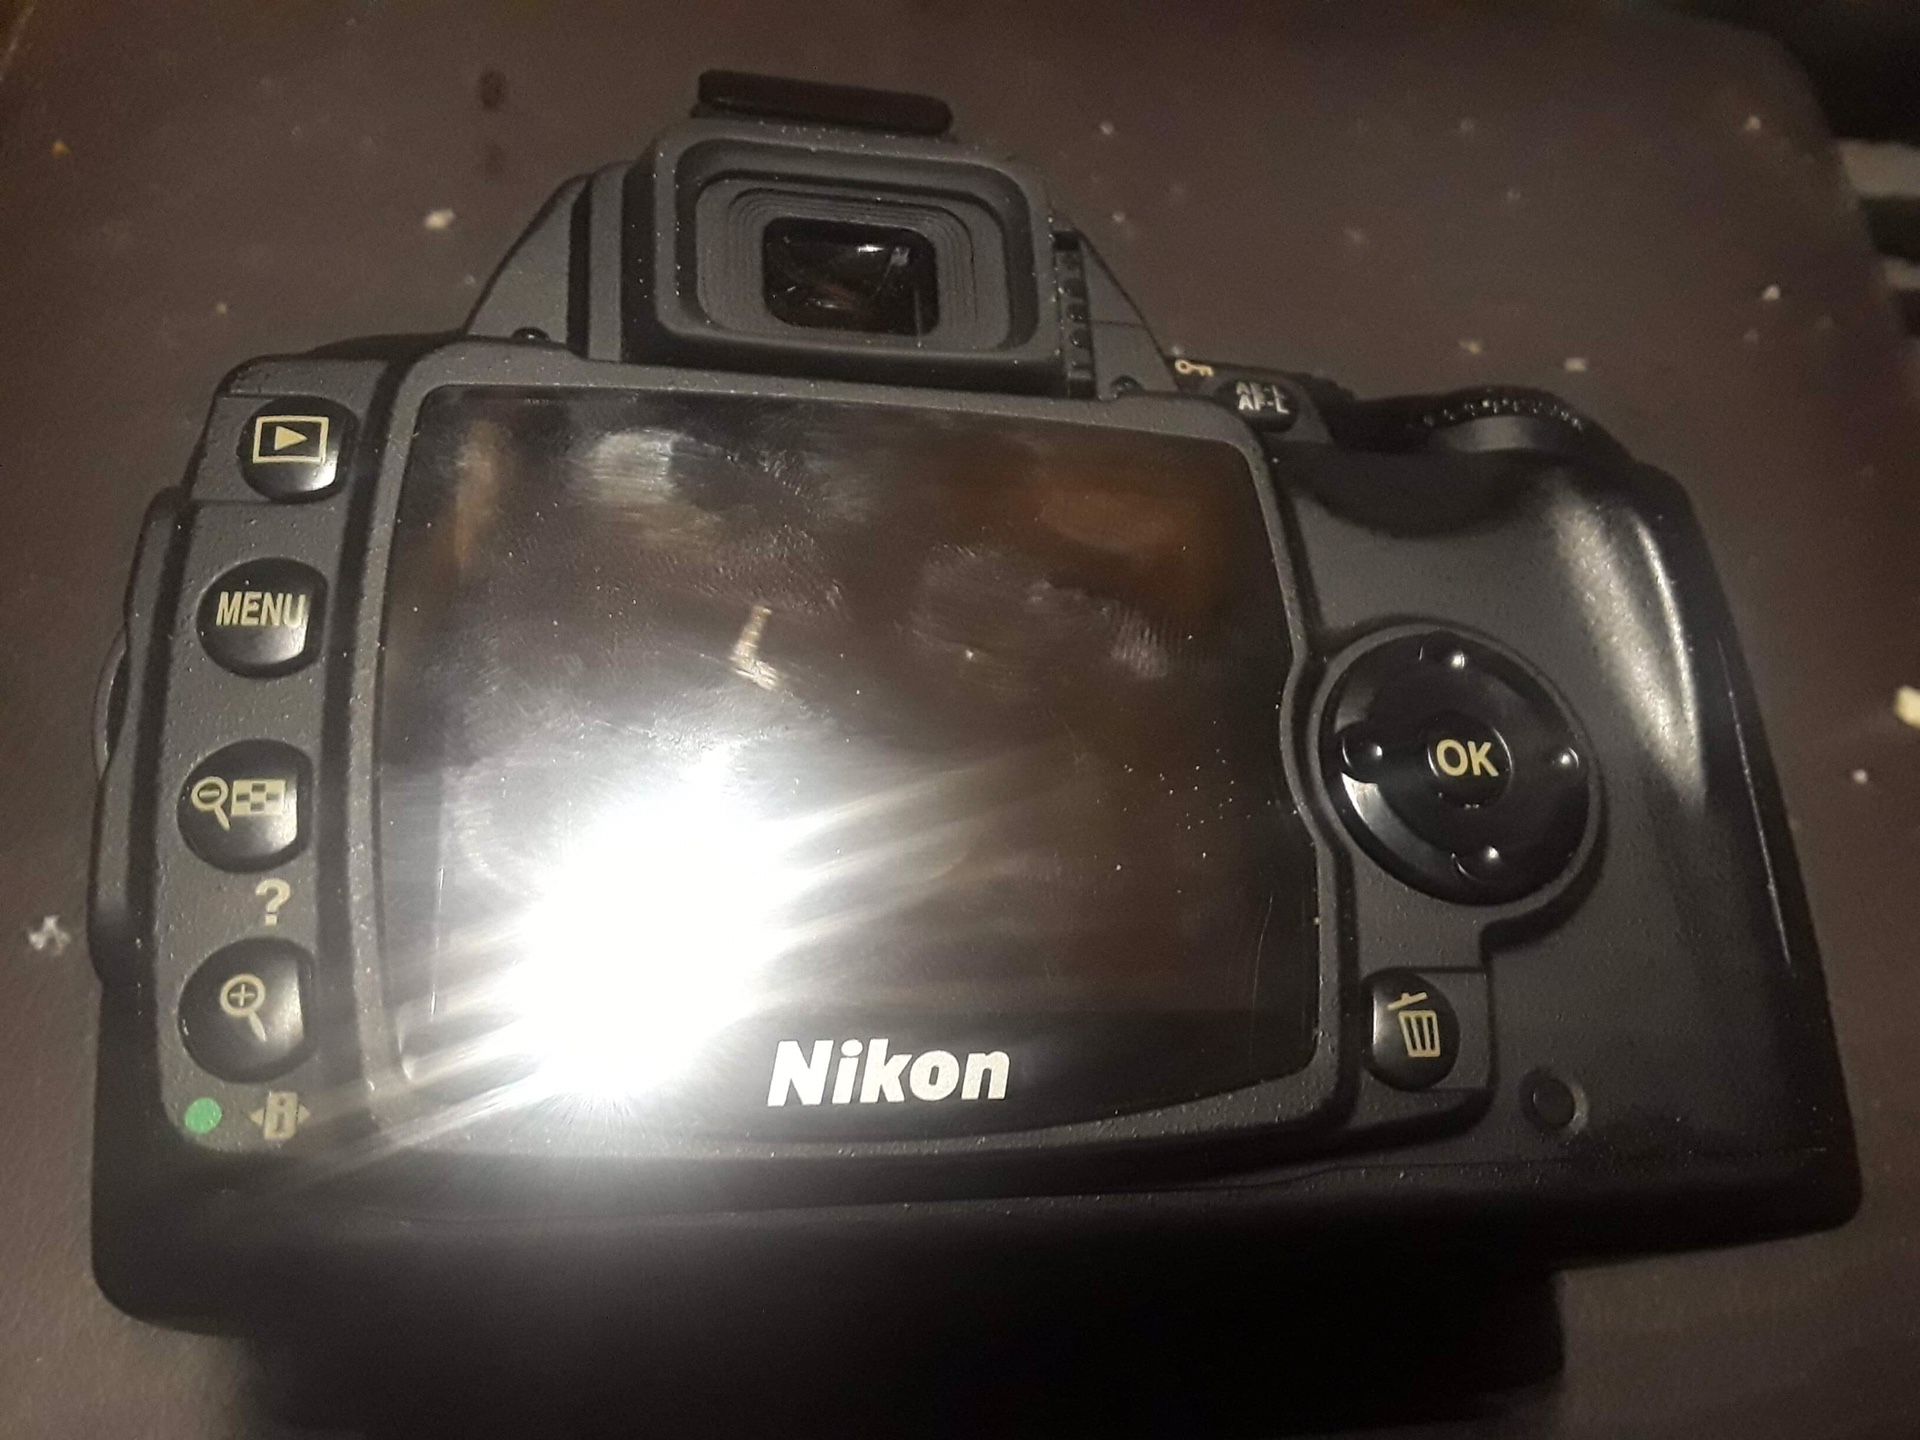 Nikon digital camera